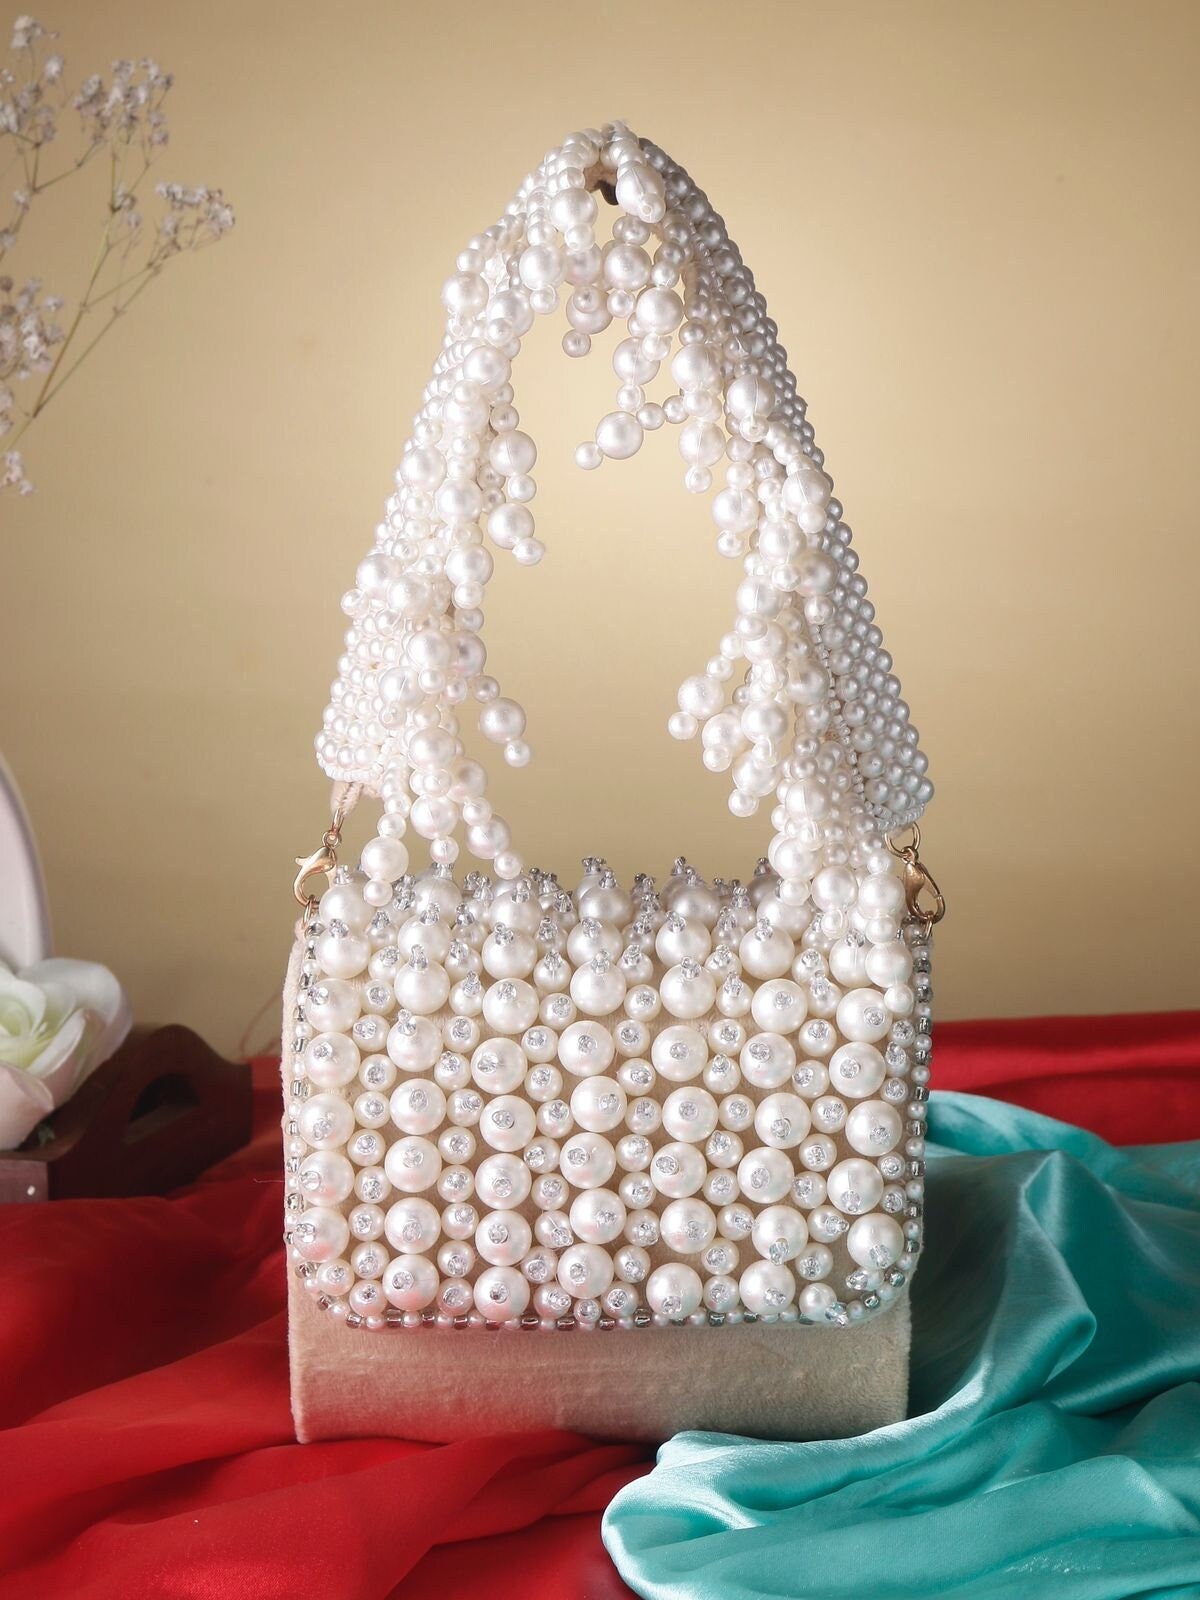 Pearl Beaded Bag Handmade ,Pearl HandBag,Chain Pearl Bag,Evening Bag,Gifts For Her,Wedding Beautiful Embellished Cross body Handbag